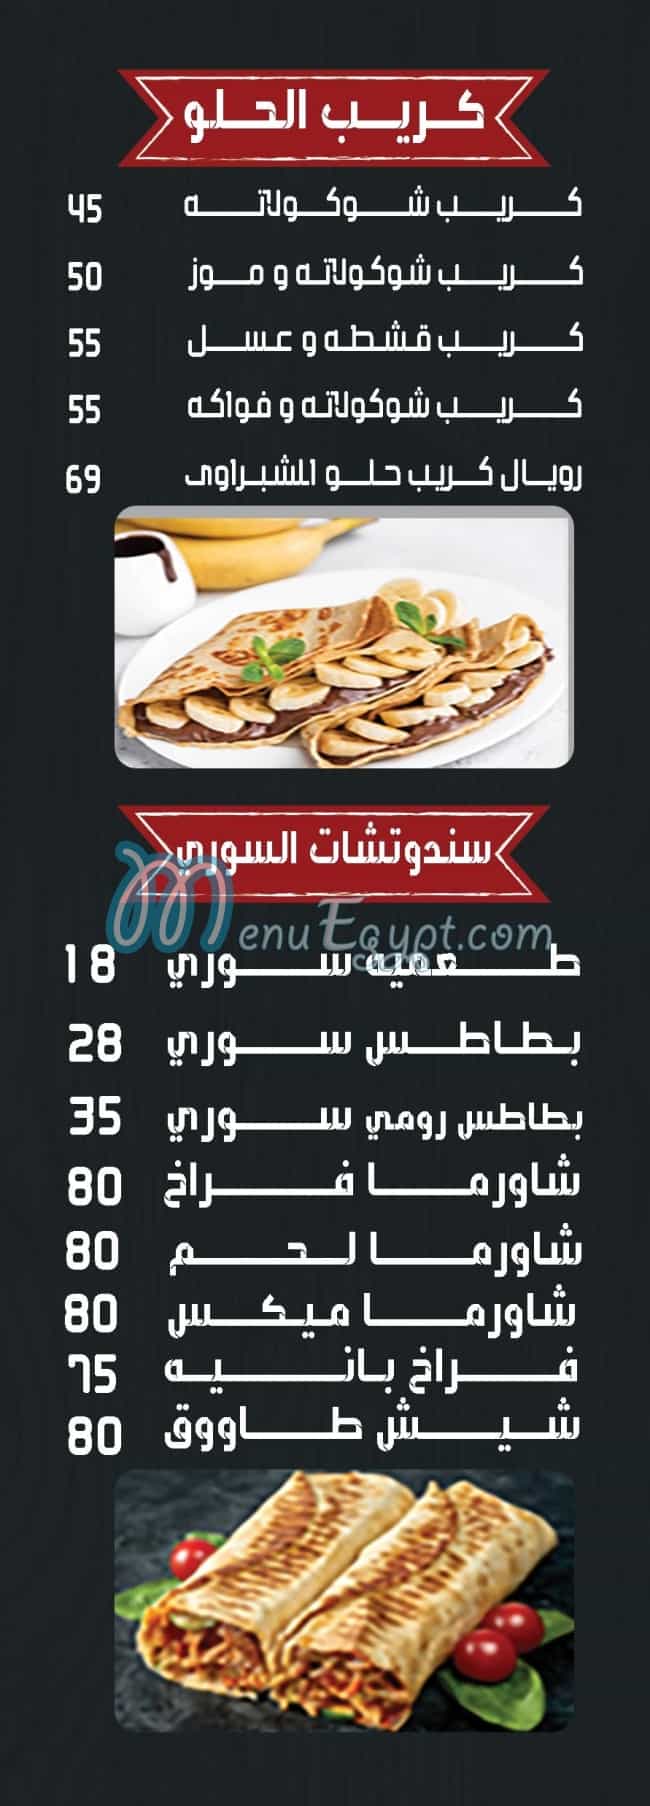 Elshabrawy Maadi menu Egypt 9